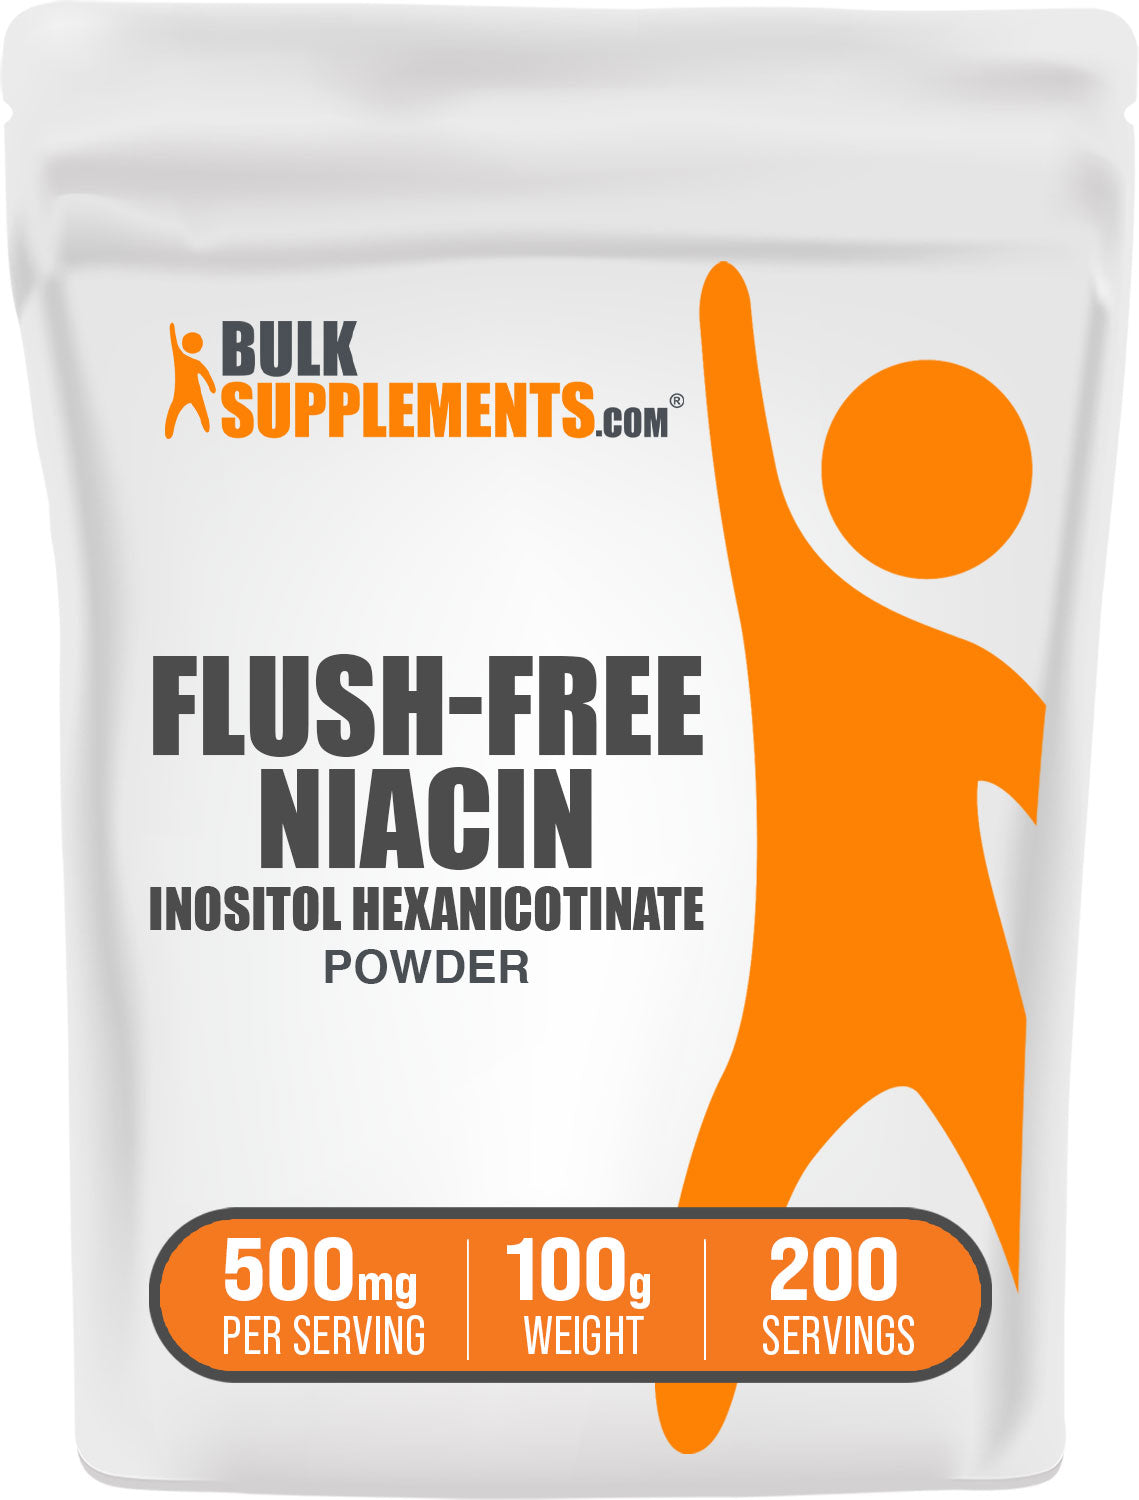 BulkSupplements.com Flush-Free Niacin Powder 100g bag